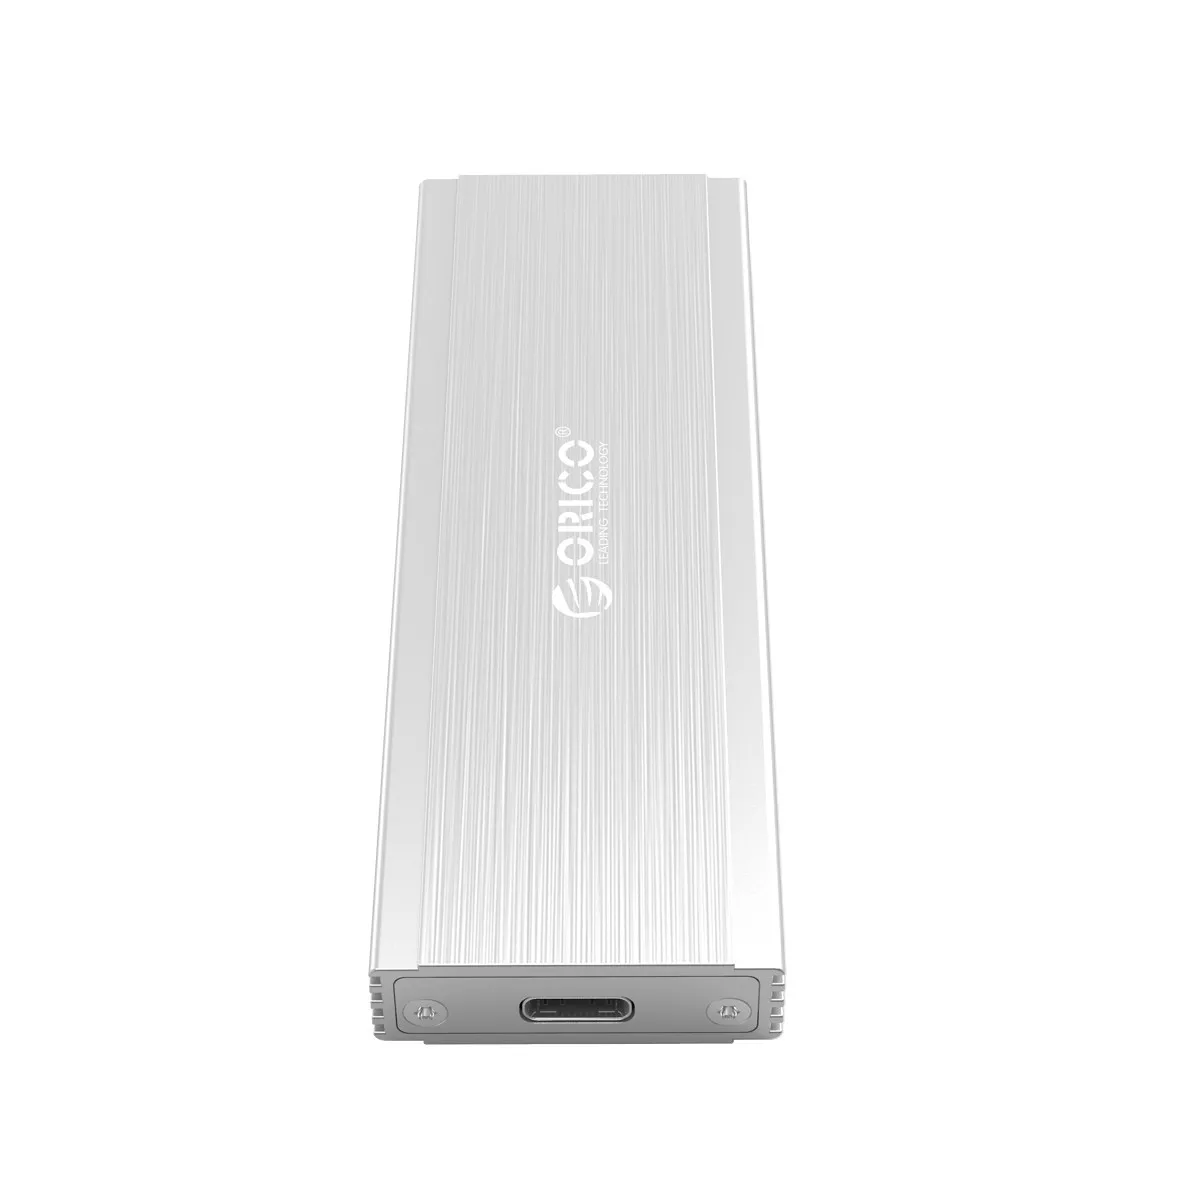 ORICO NVME M.2 SSD Корпус чехол USB3.1 GEN2 10 Гбит/с SSD Мобильный коробка для жесткого диска внешний корпус чехол для M2 SSD чехол